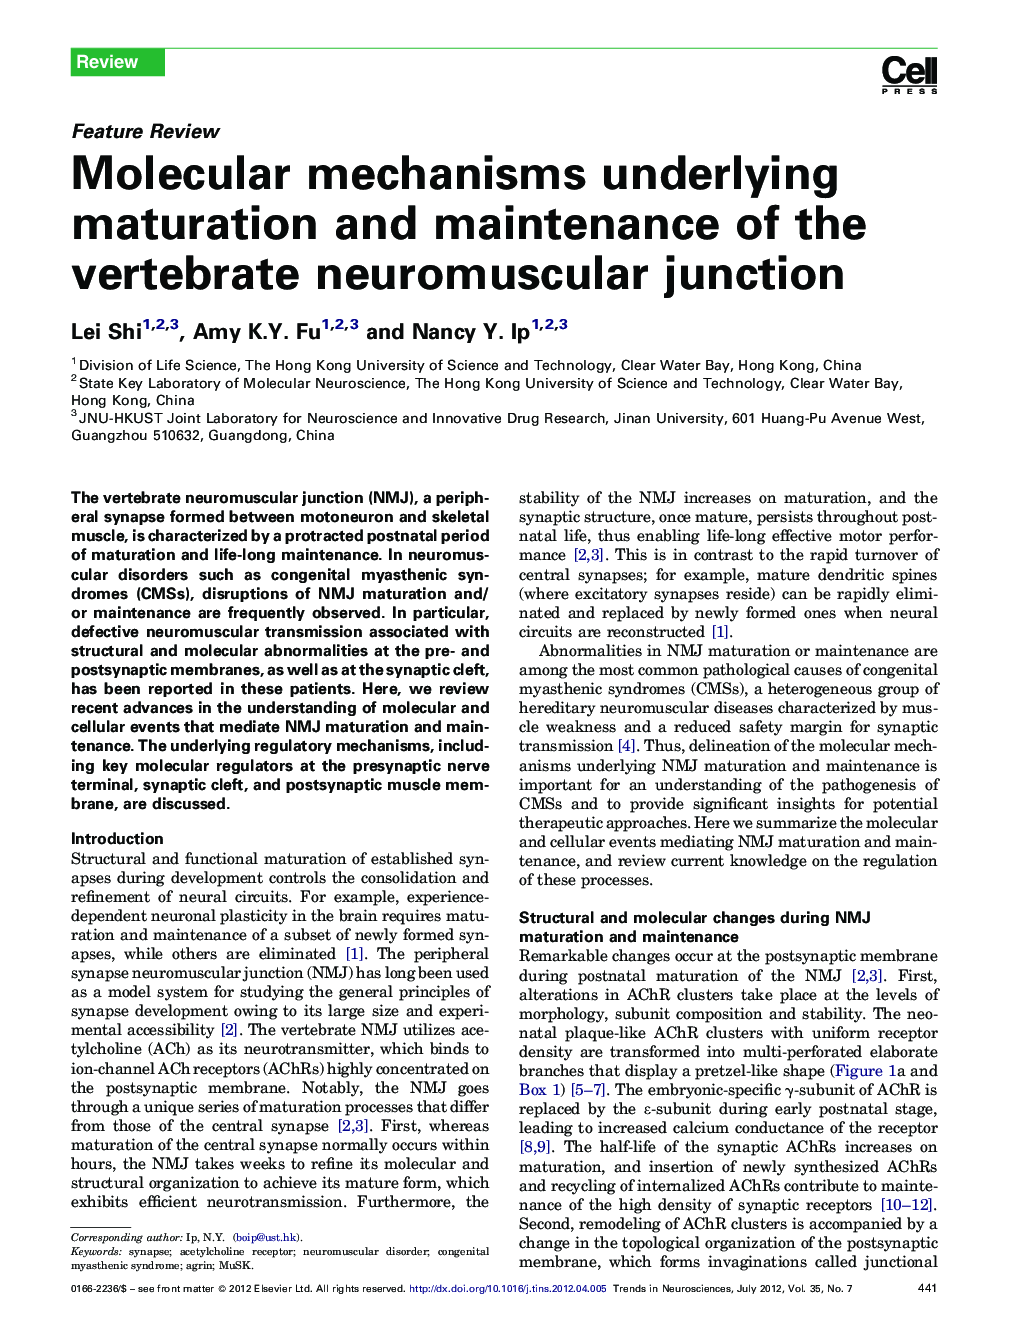 Molecular mechanisms underlying maturation and maintenance of the vertebrate neuromuscular junction